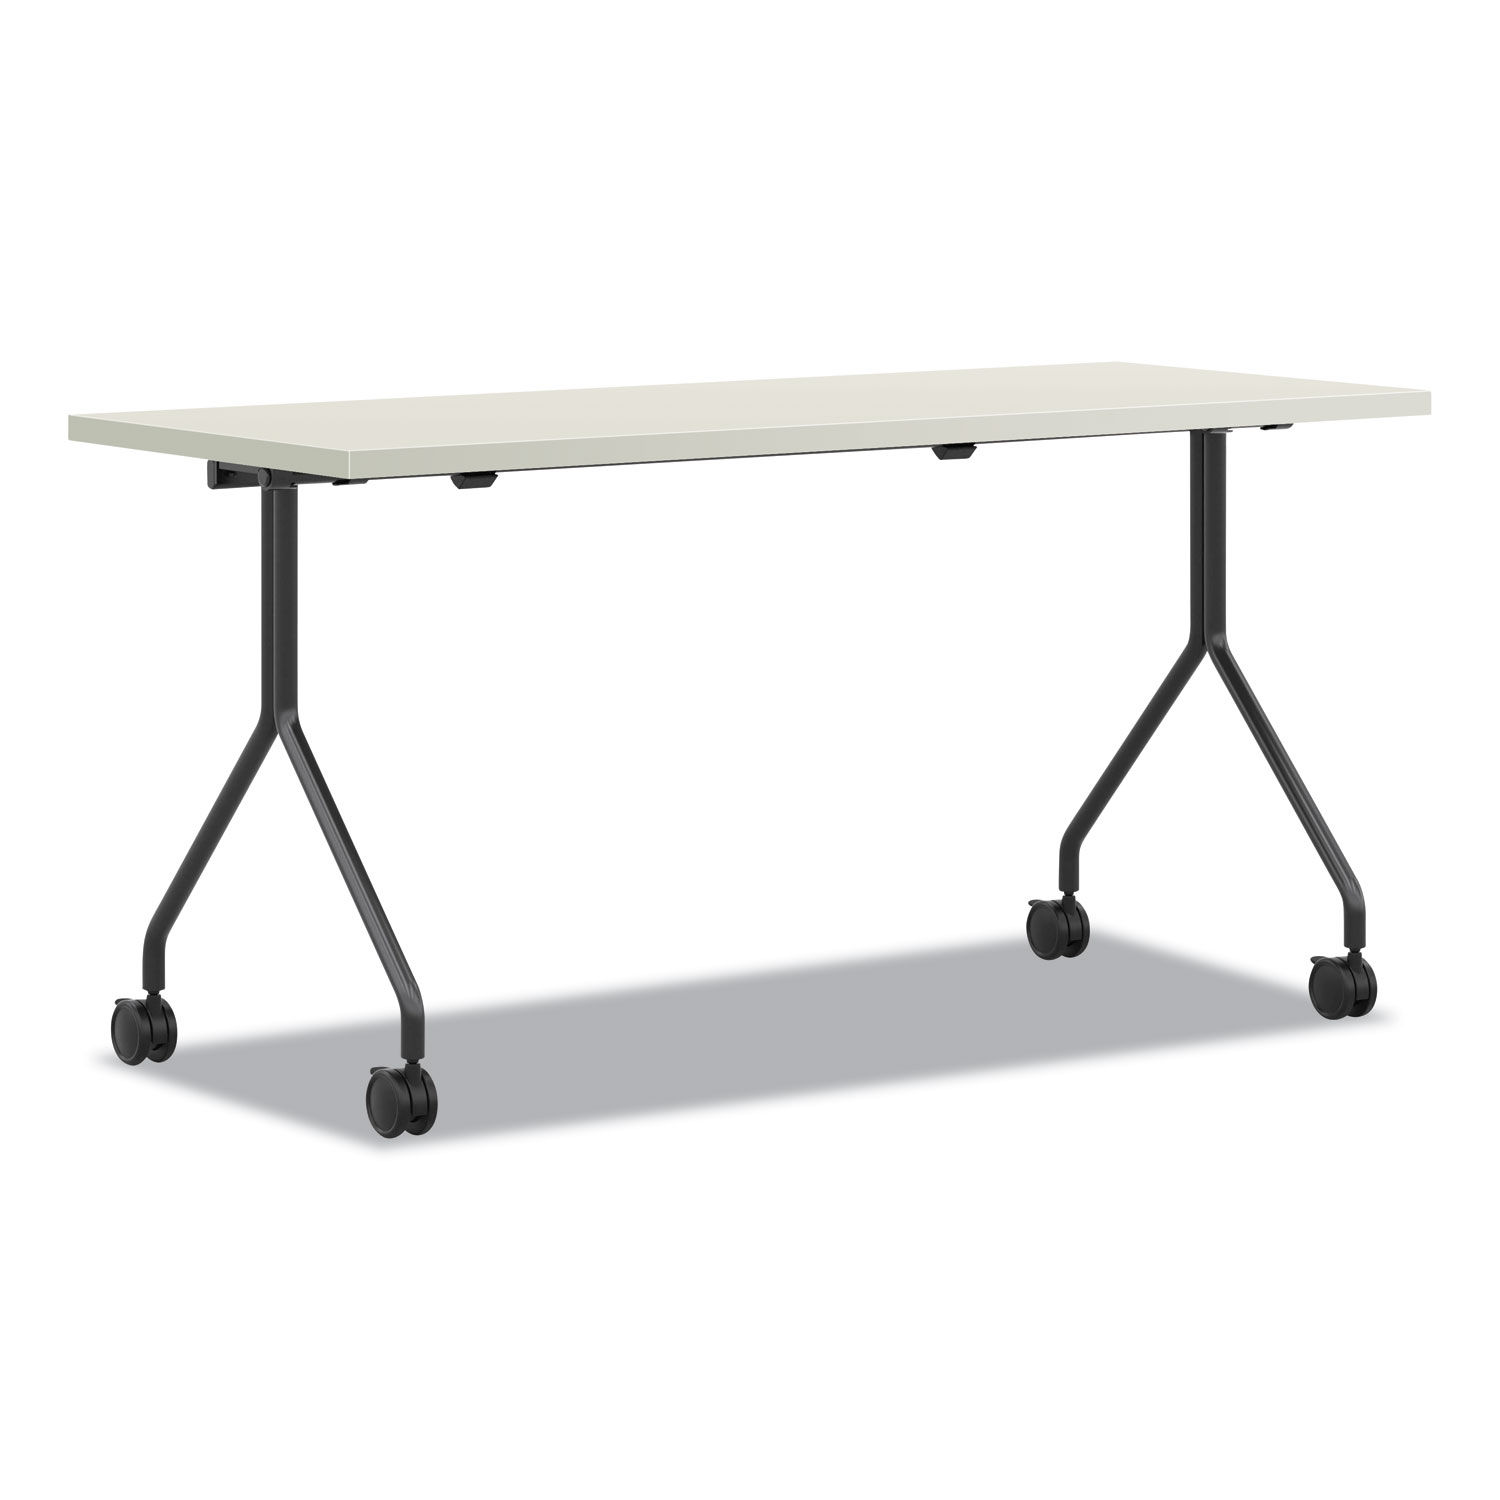 Between Nested Multipurpose Tables Rectangular, 72 x 30, Silver Mesh/Loft